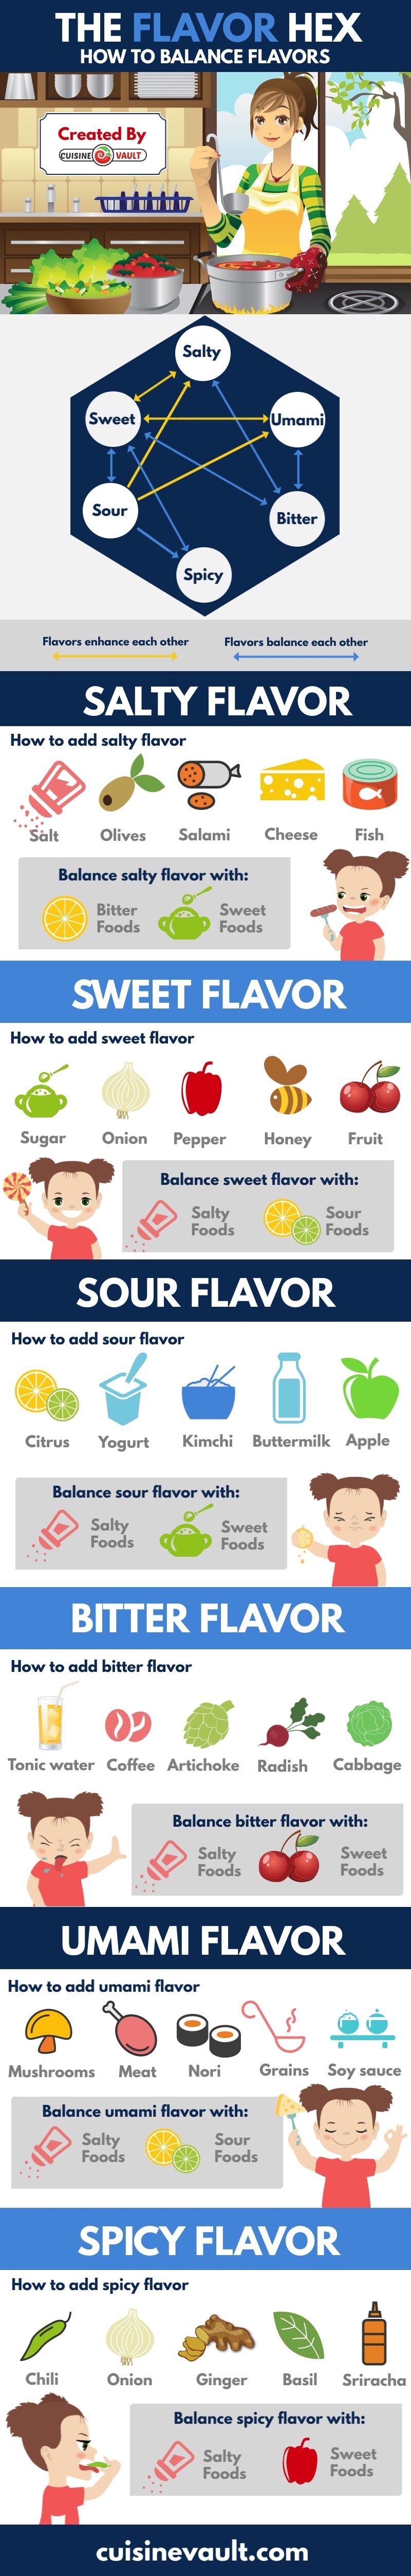 Flavor profile infographic